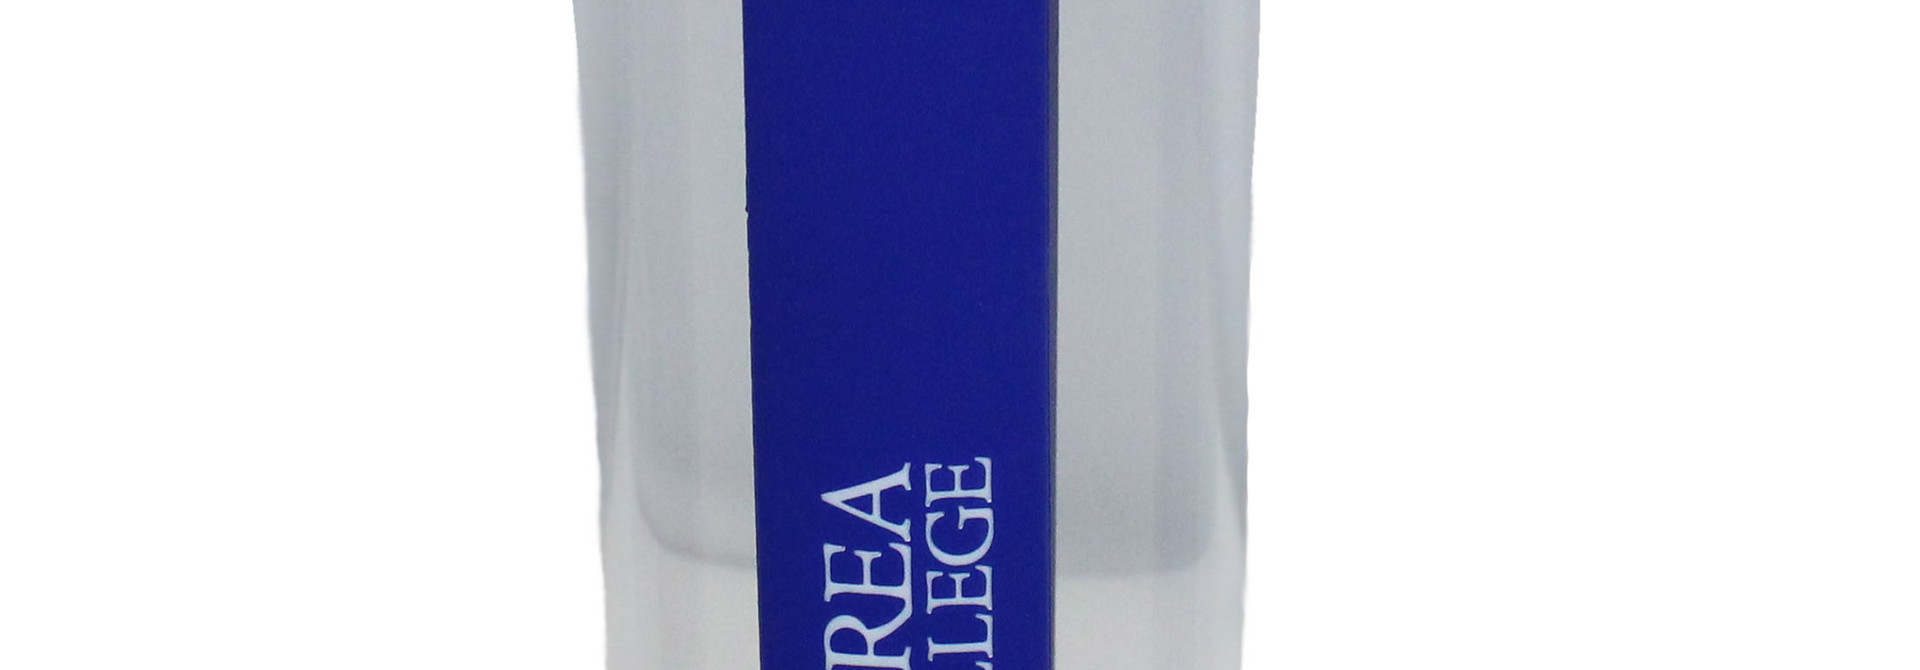 Berea College Water Bottle